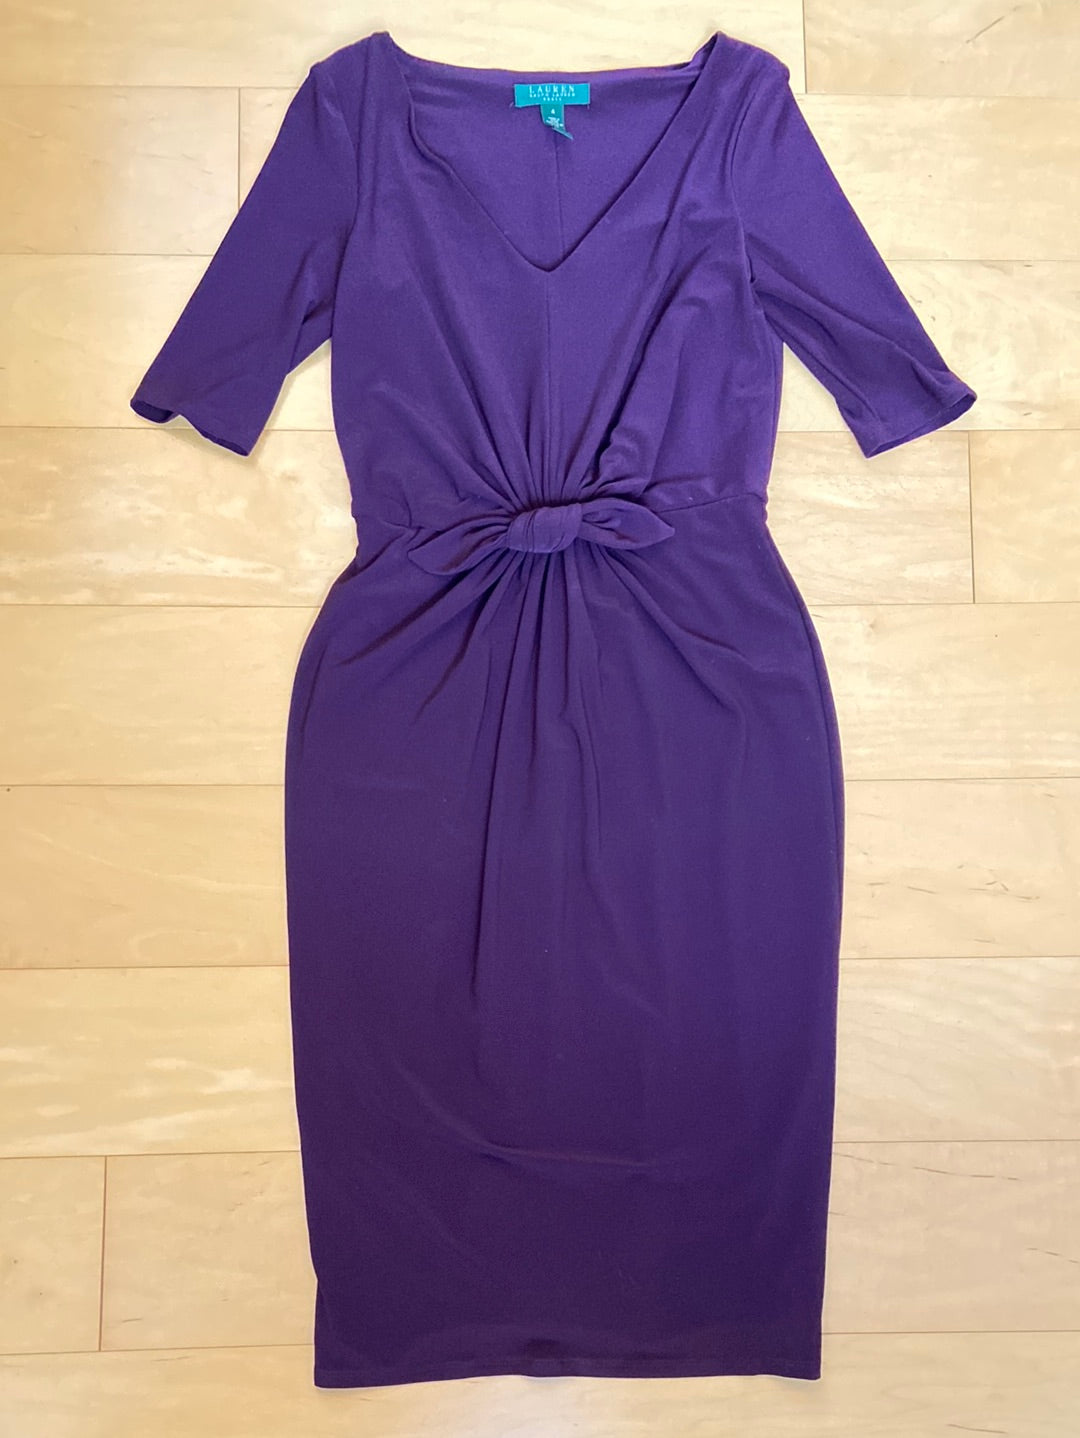 EGGPLANT PURPLE Ralph Lauren Dress Size 4